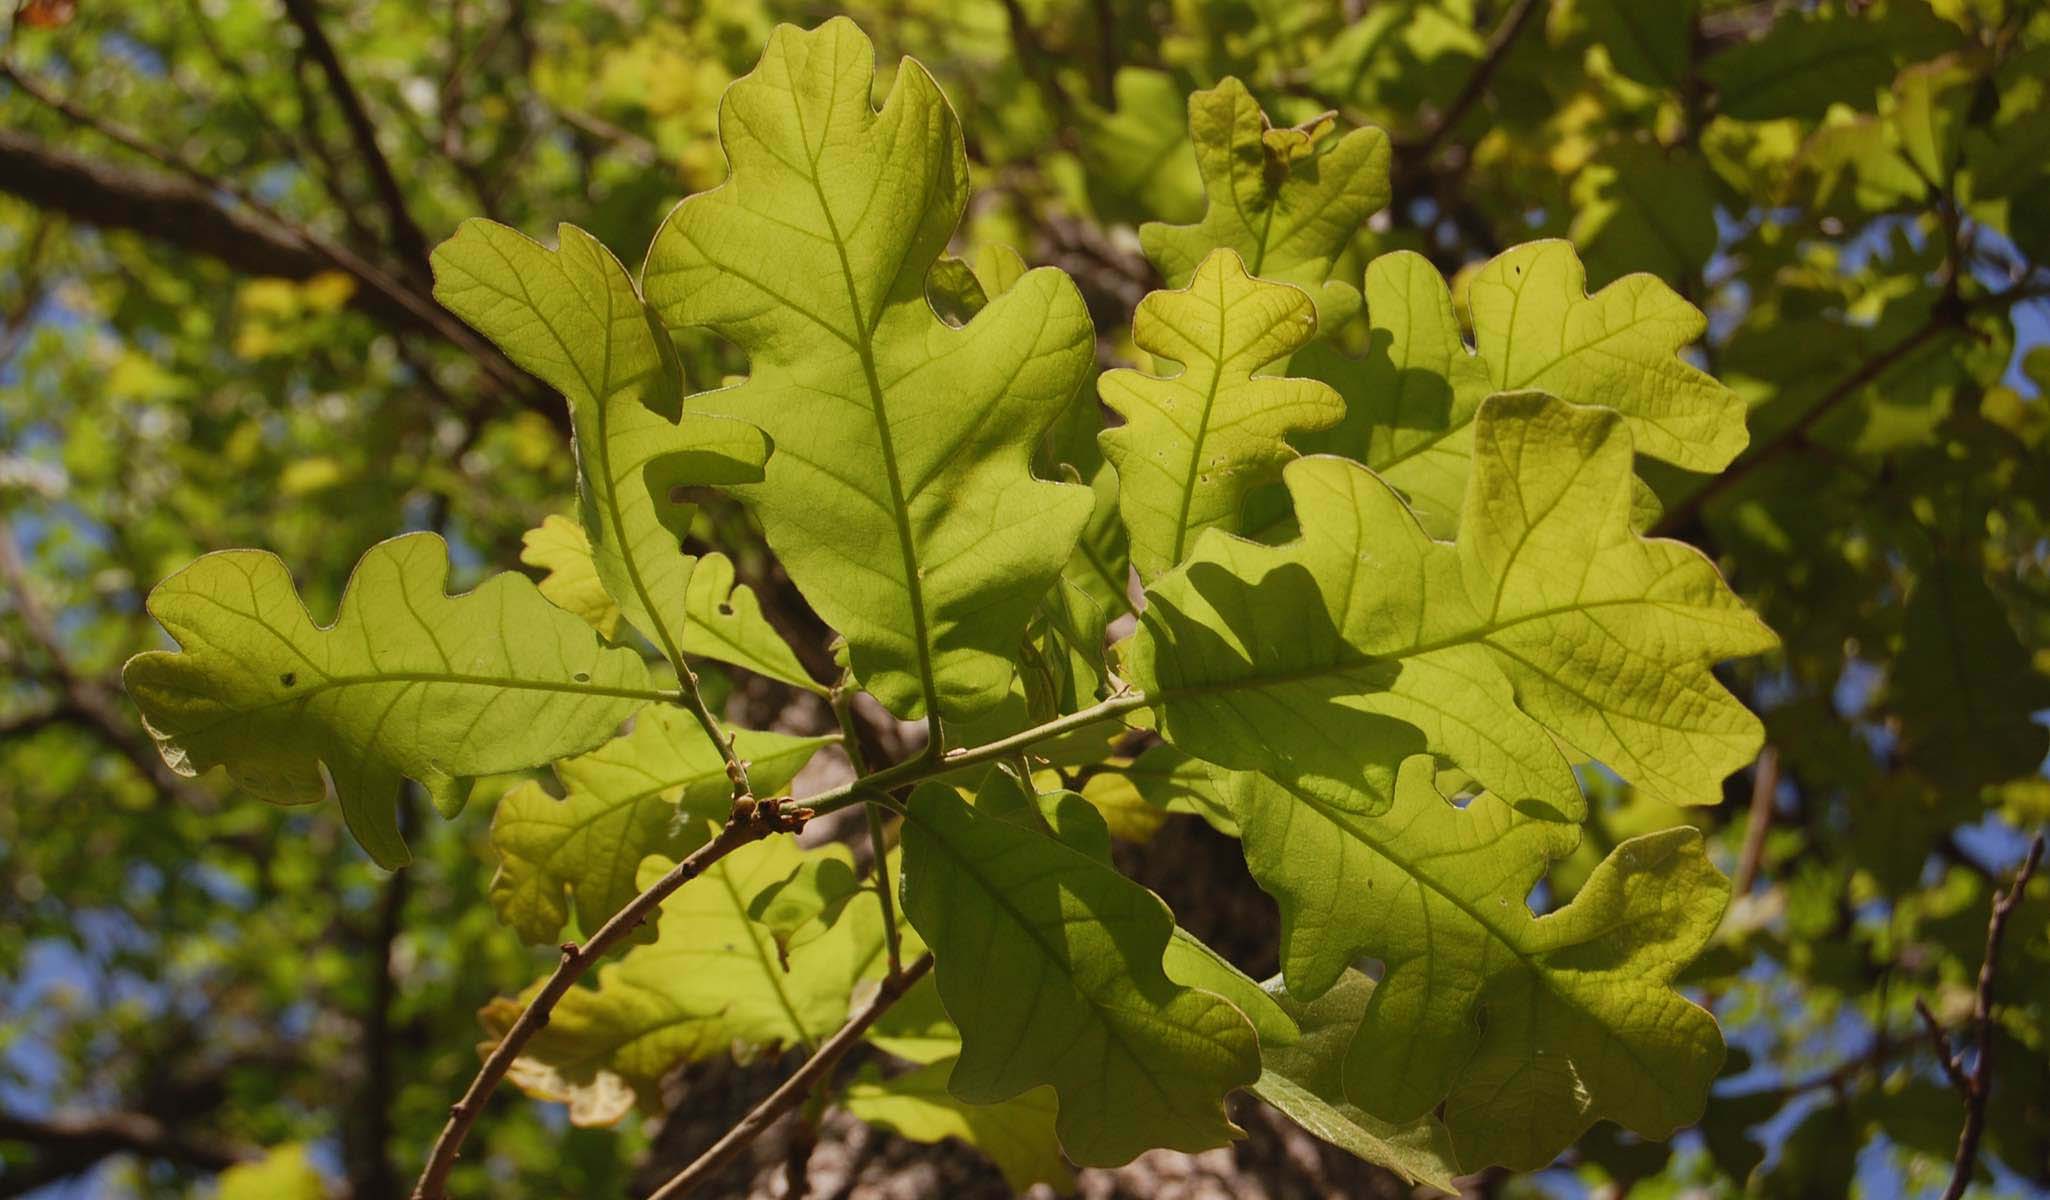 White Oak leaves